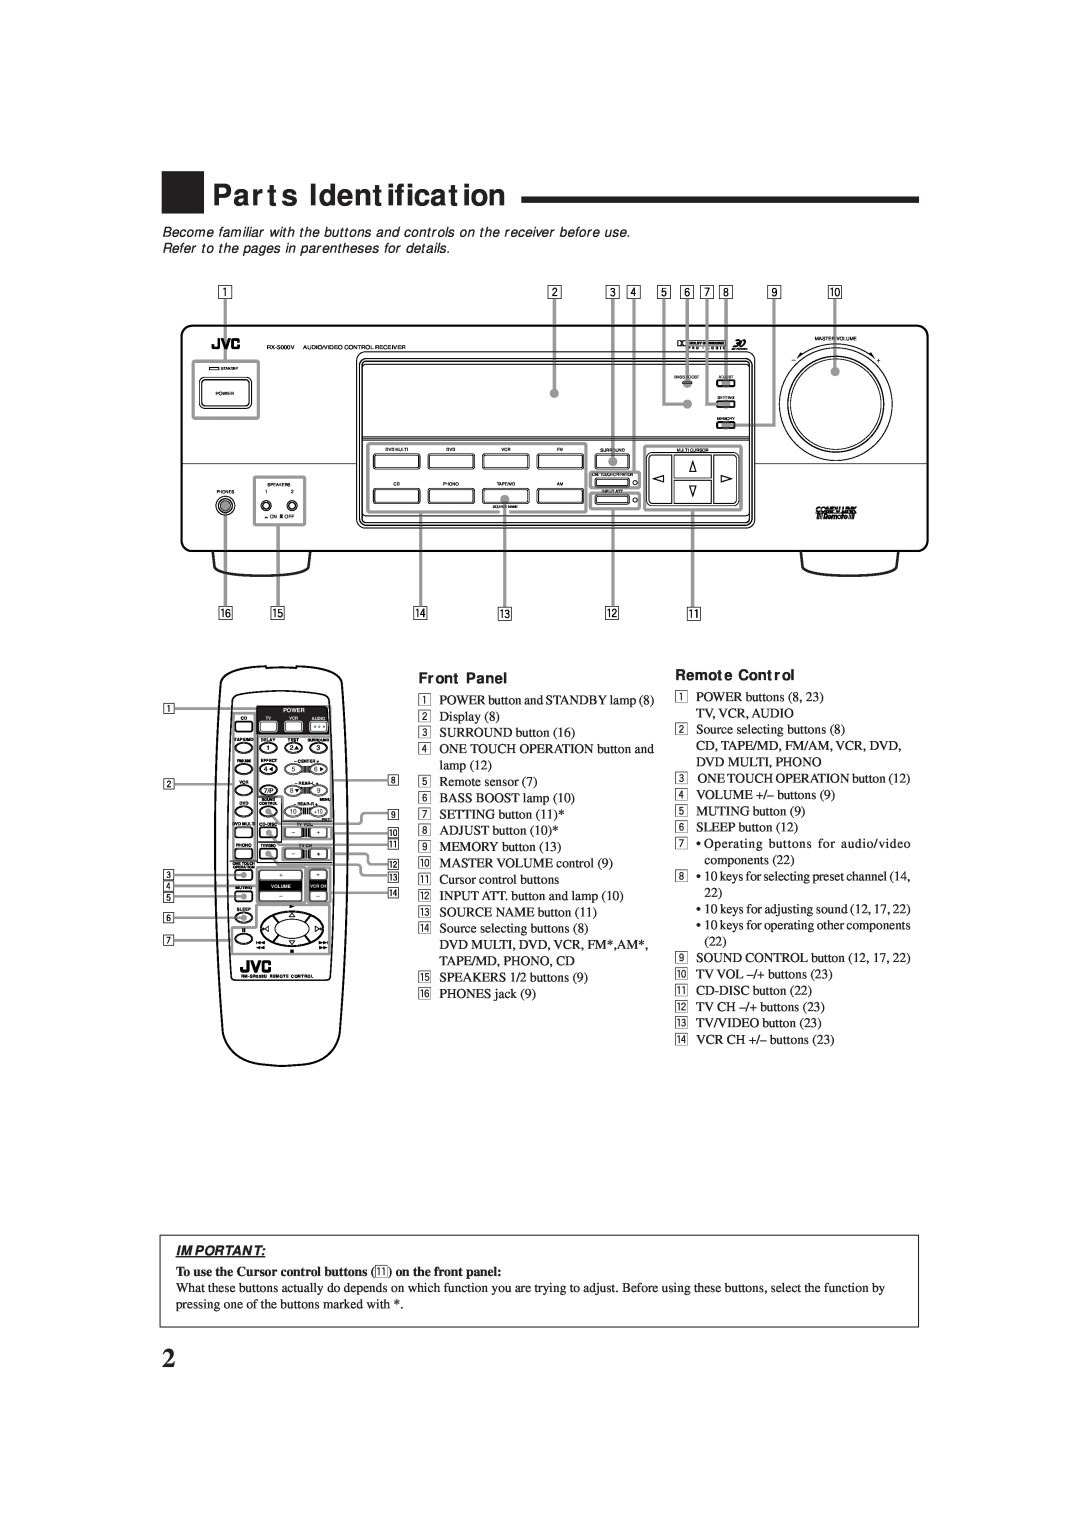 JVC RX-5000VBK manual Parts Identification, Front Panel, Remote Control 